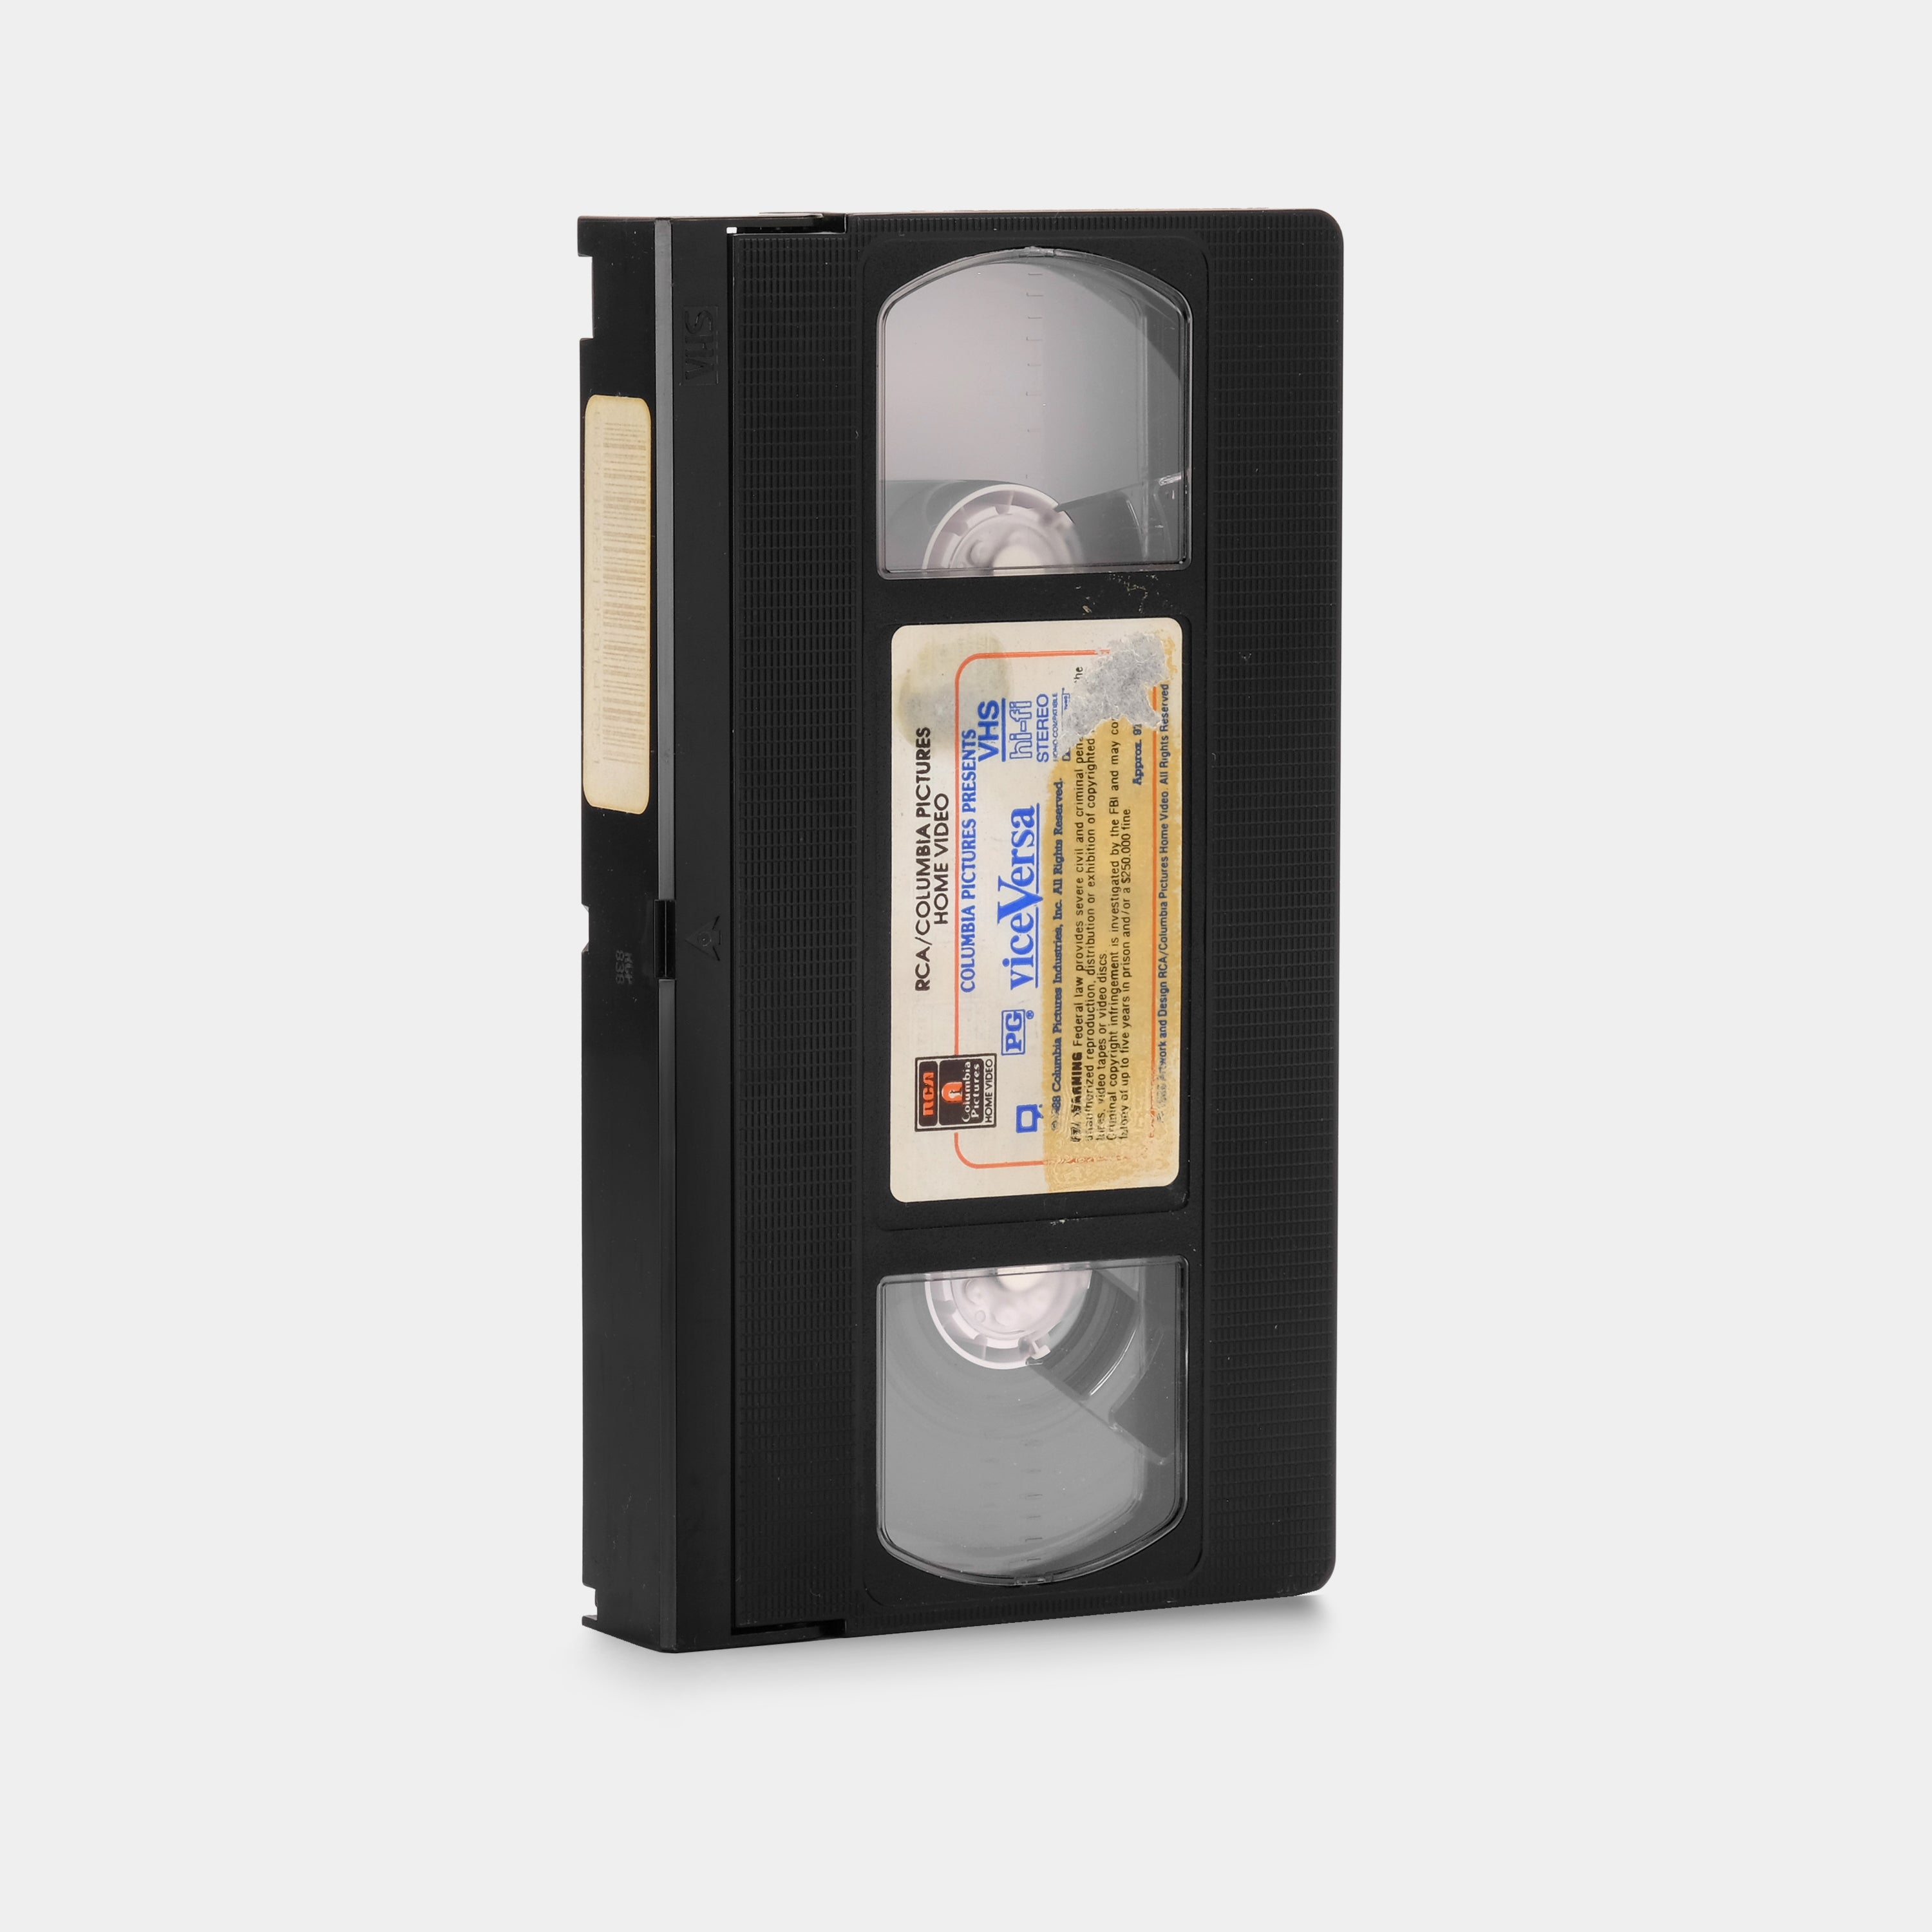 Vice Versa VHS Tape